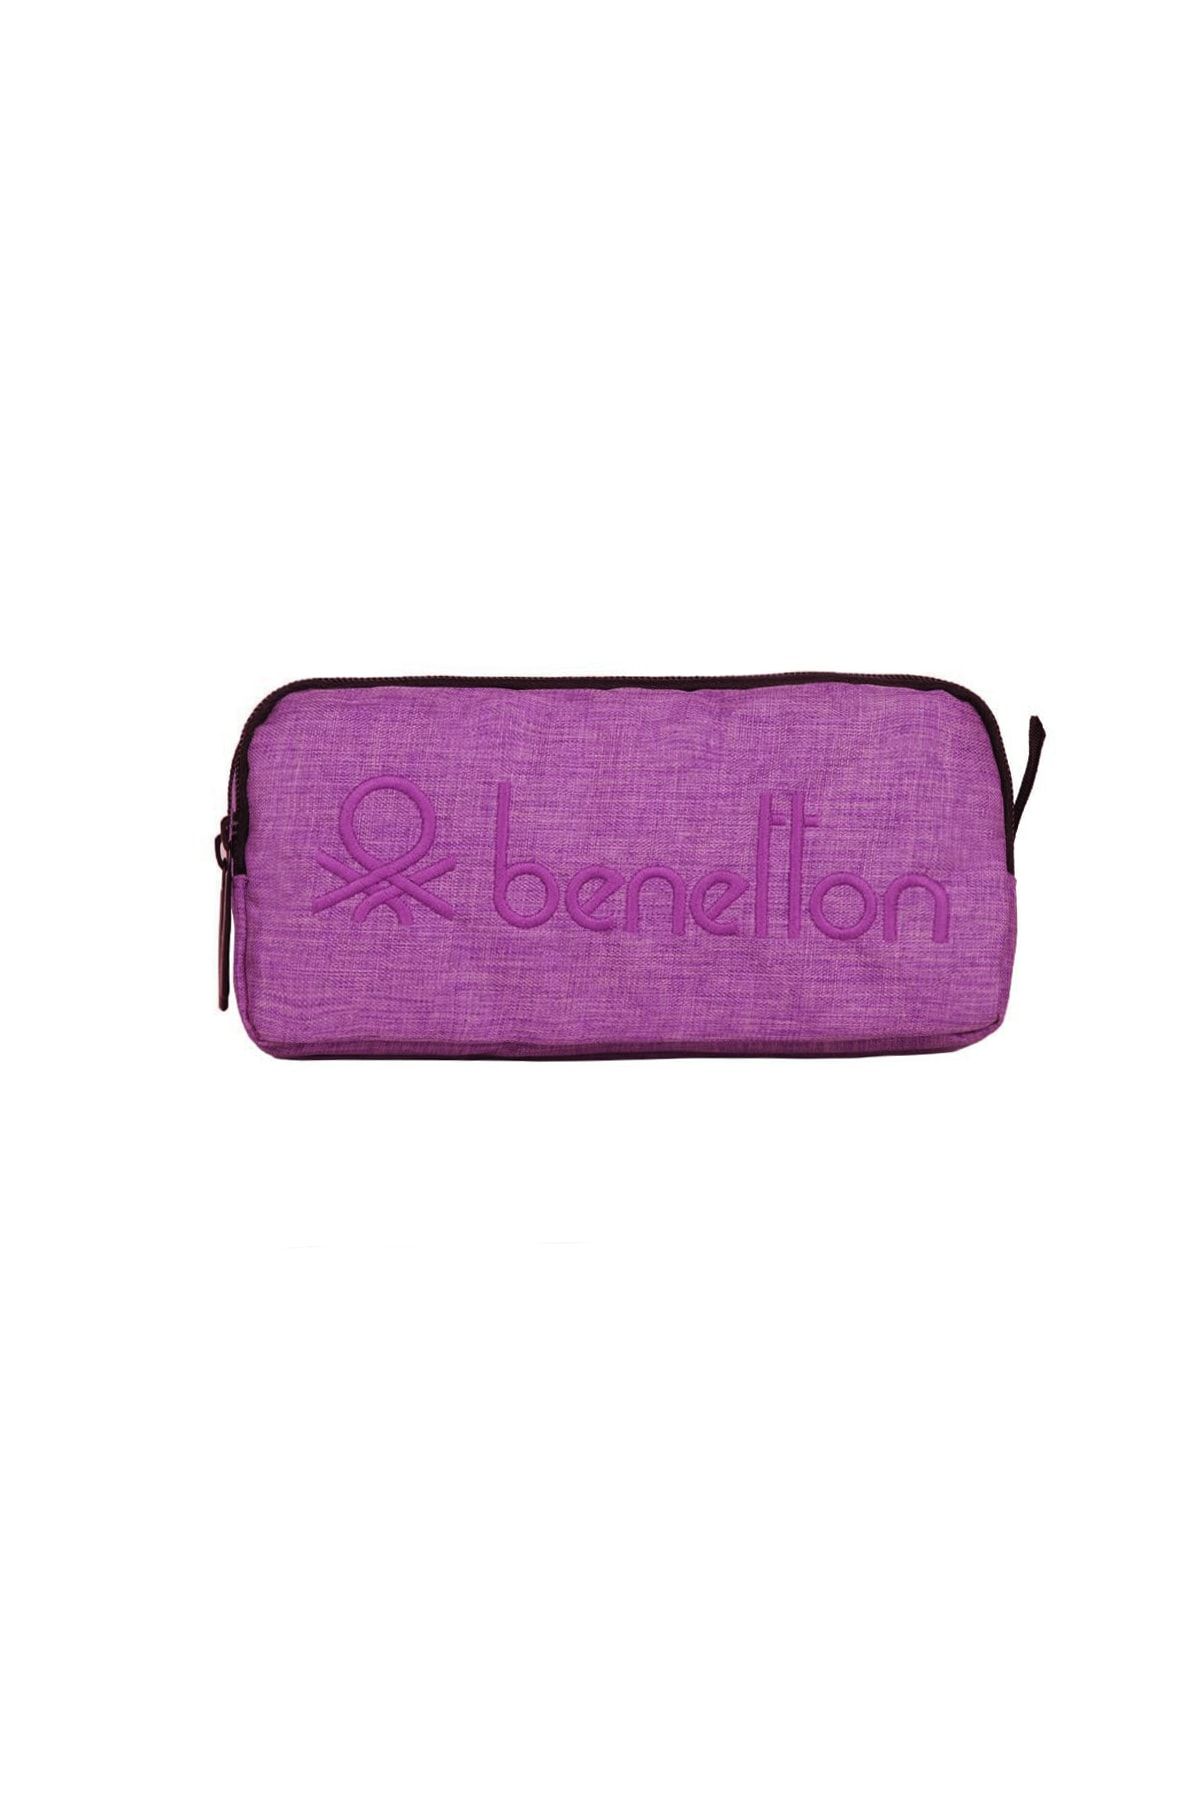 Benetton Cool pencil case